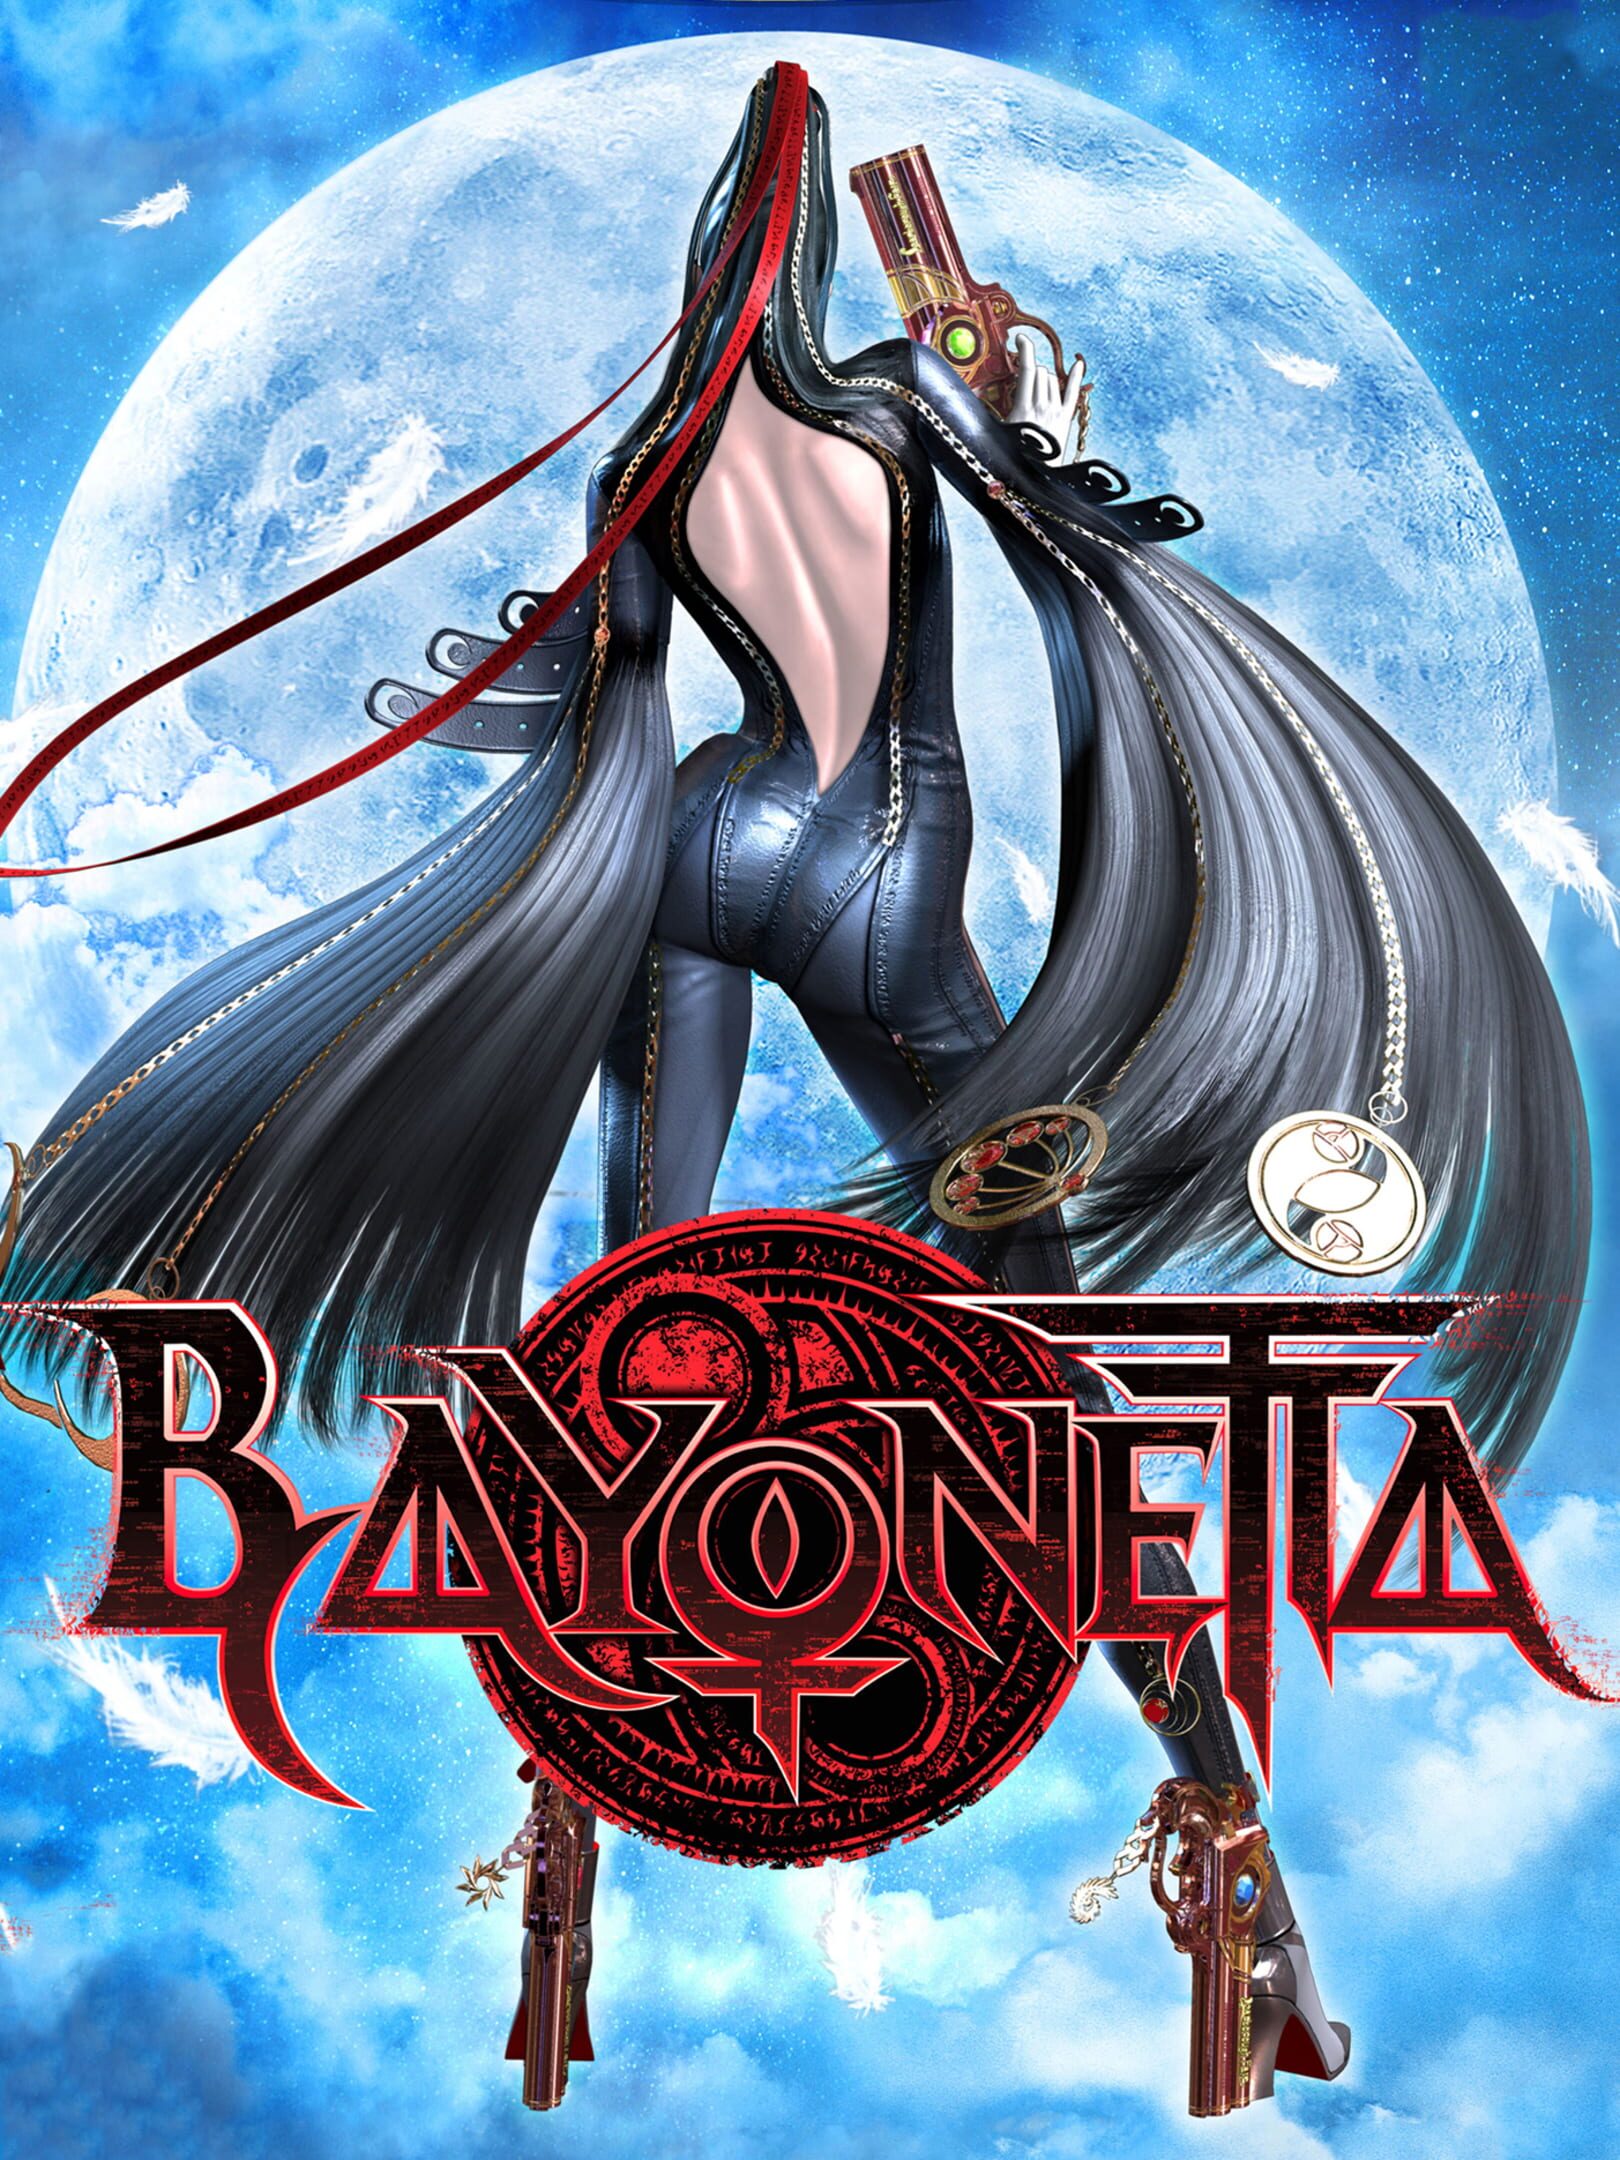 BAYONETTA 2 Full Game Walkthrough, All Verses, 4K60FPS